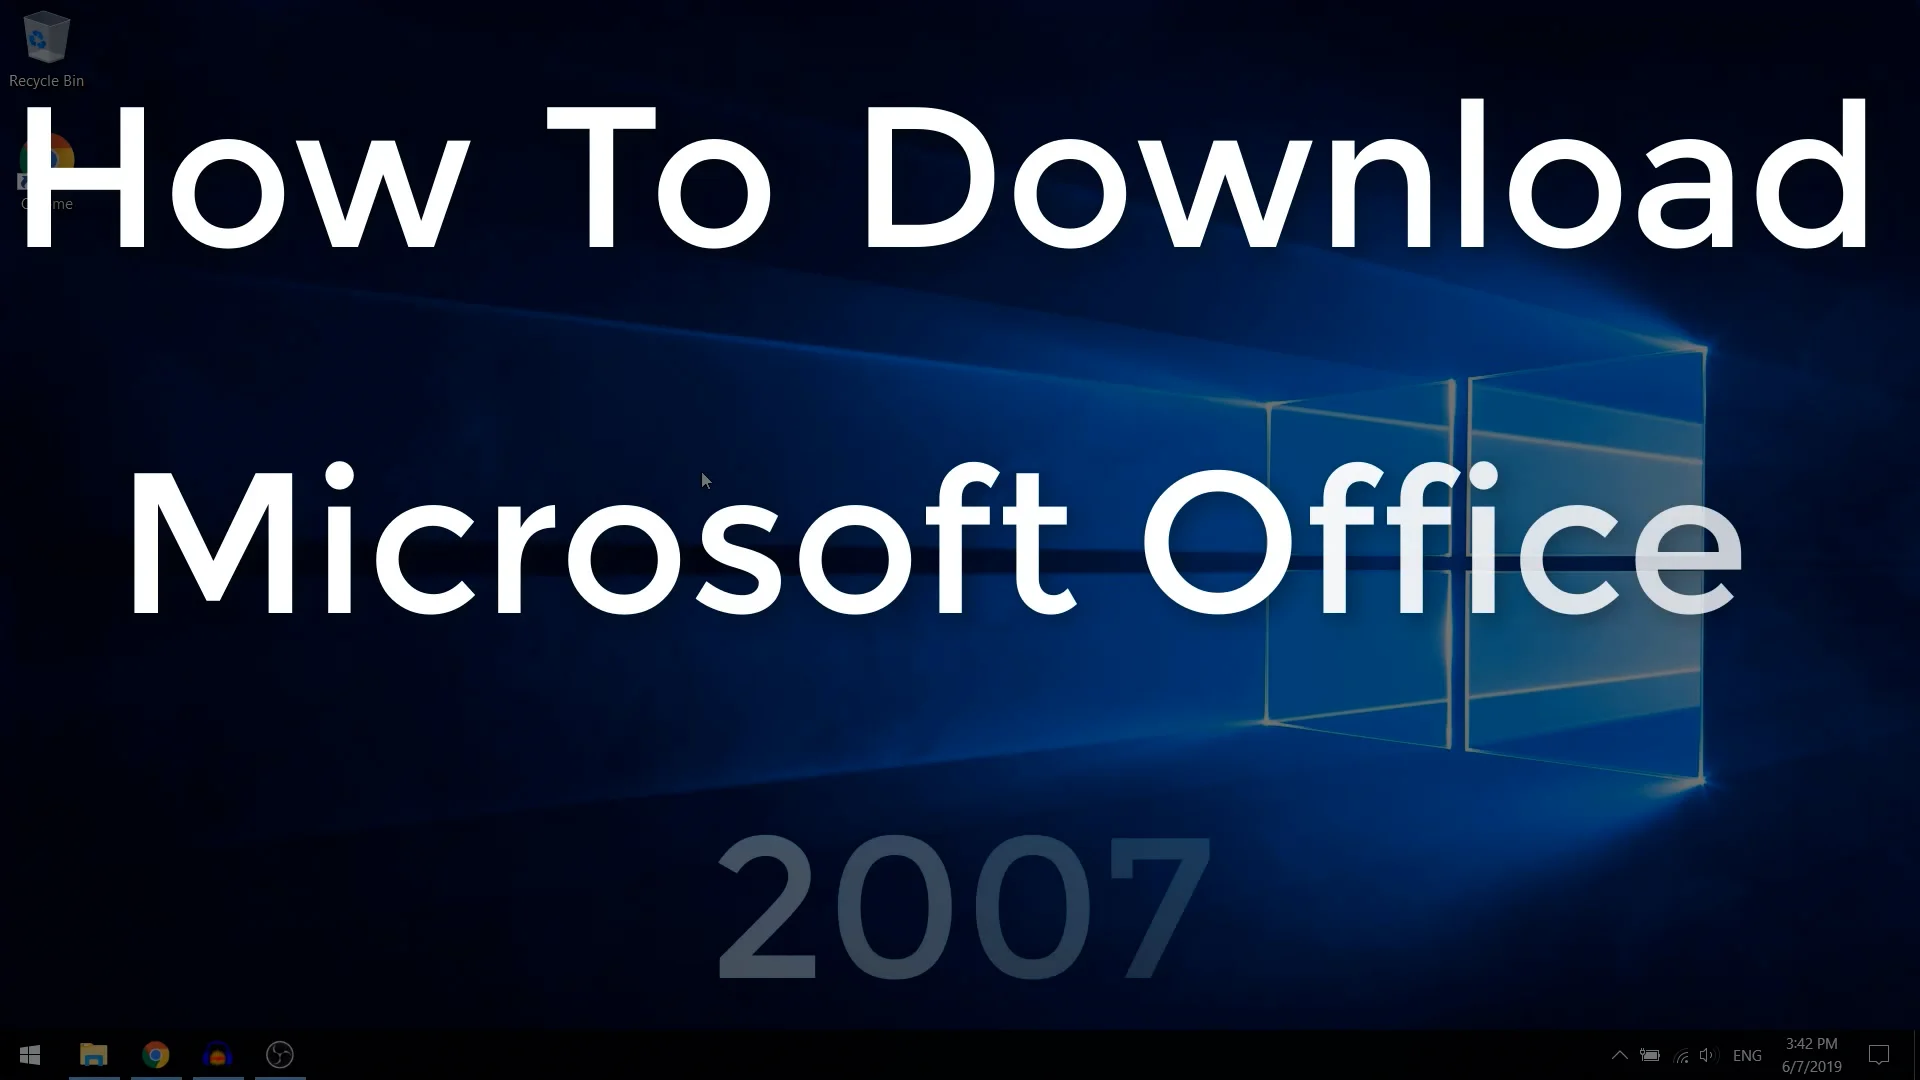 Microsoft Office 2007 Free Download.avi on Vimeo